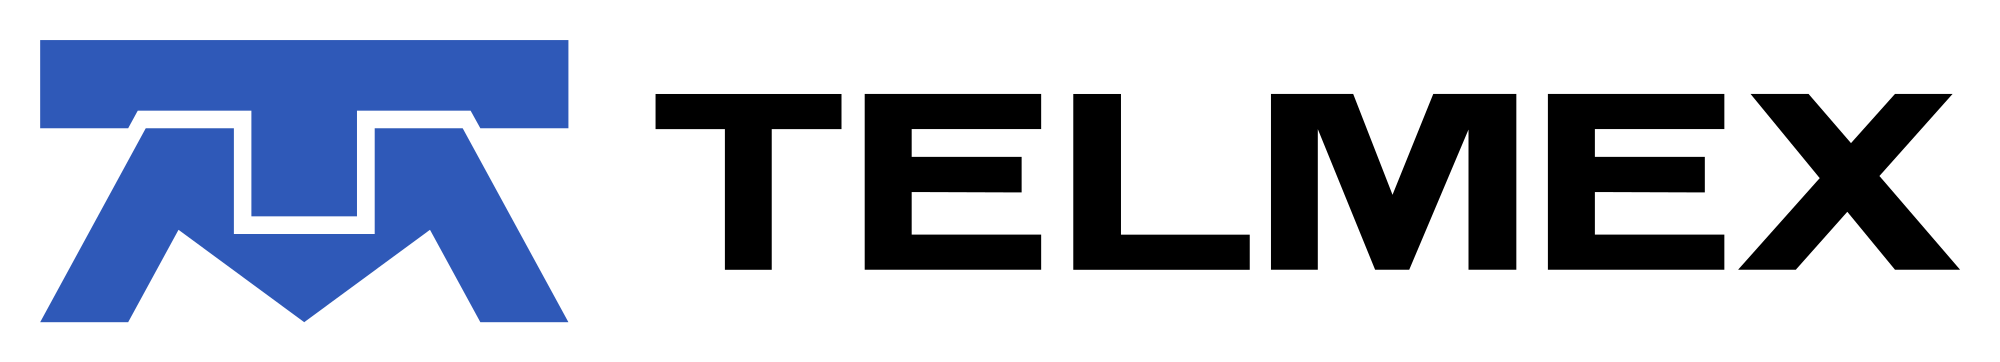 Telmex (Chile) Brand Logo